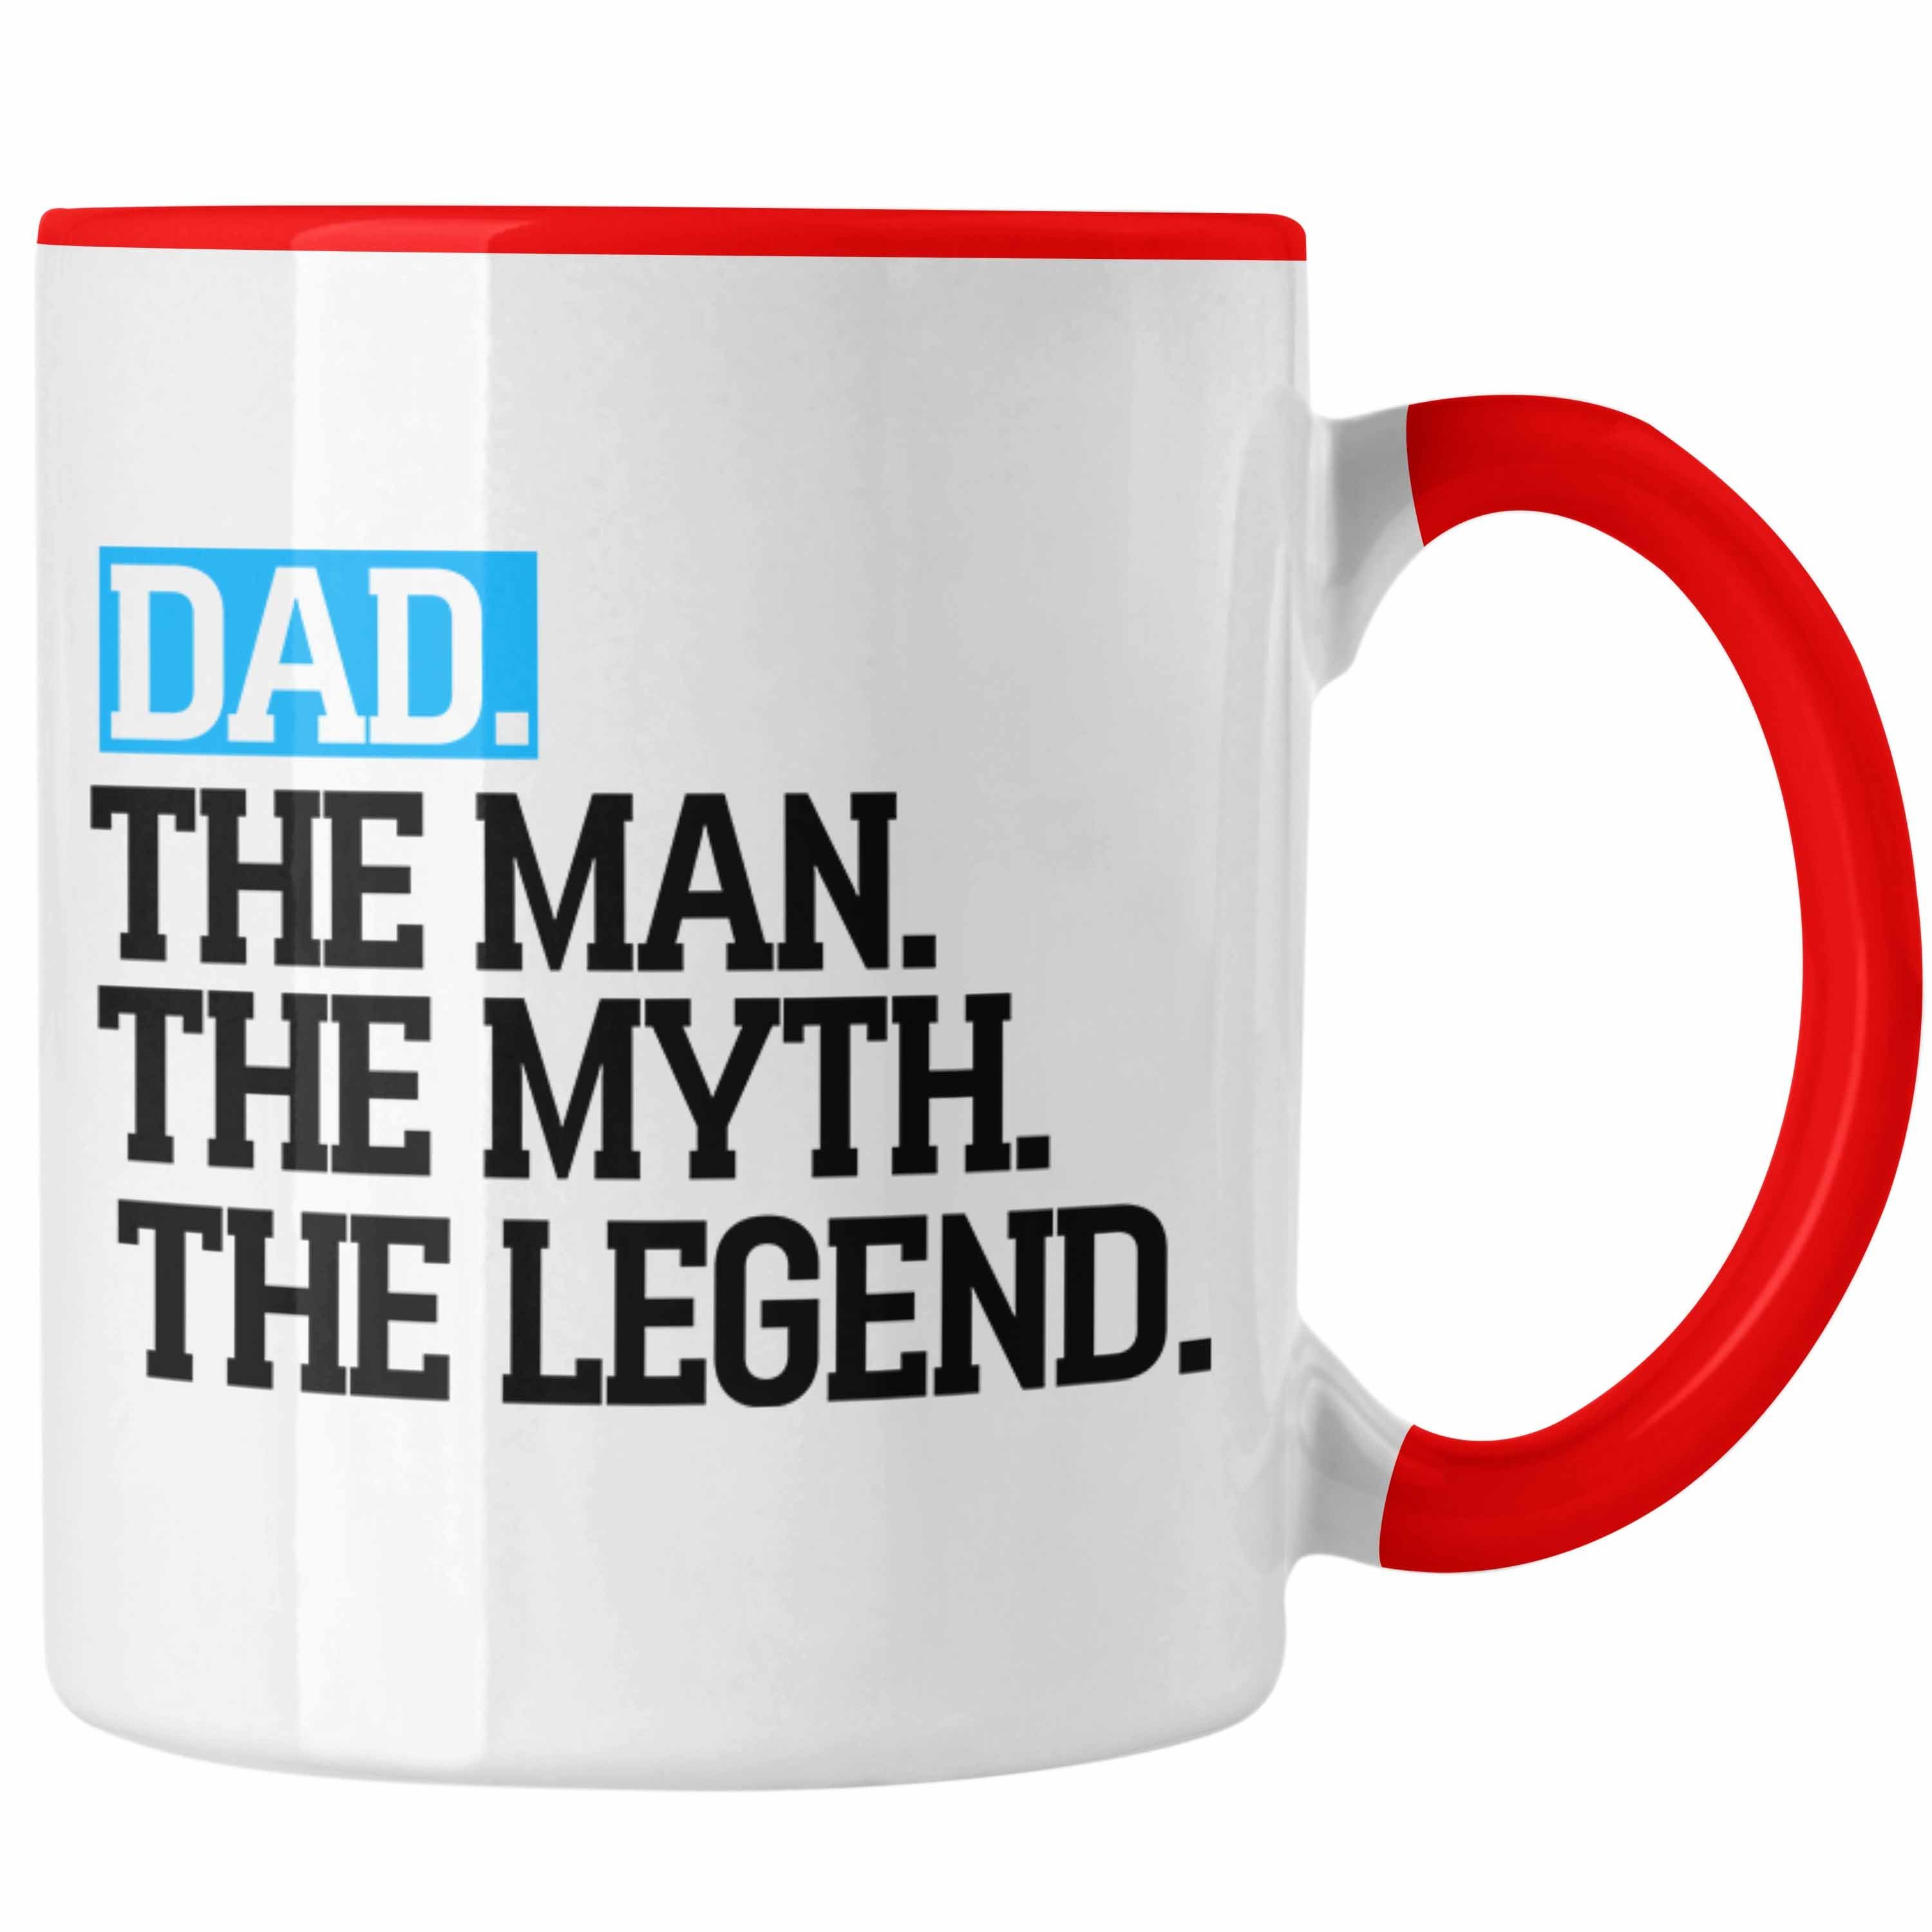 Trendation Tasse Tasse für Vater Lustig "Dad The Man The Myth The Legend" Vatertag Spru Rot